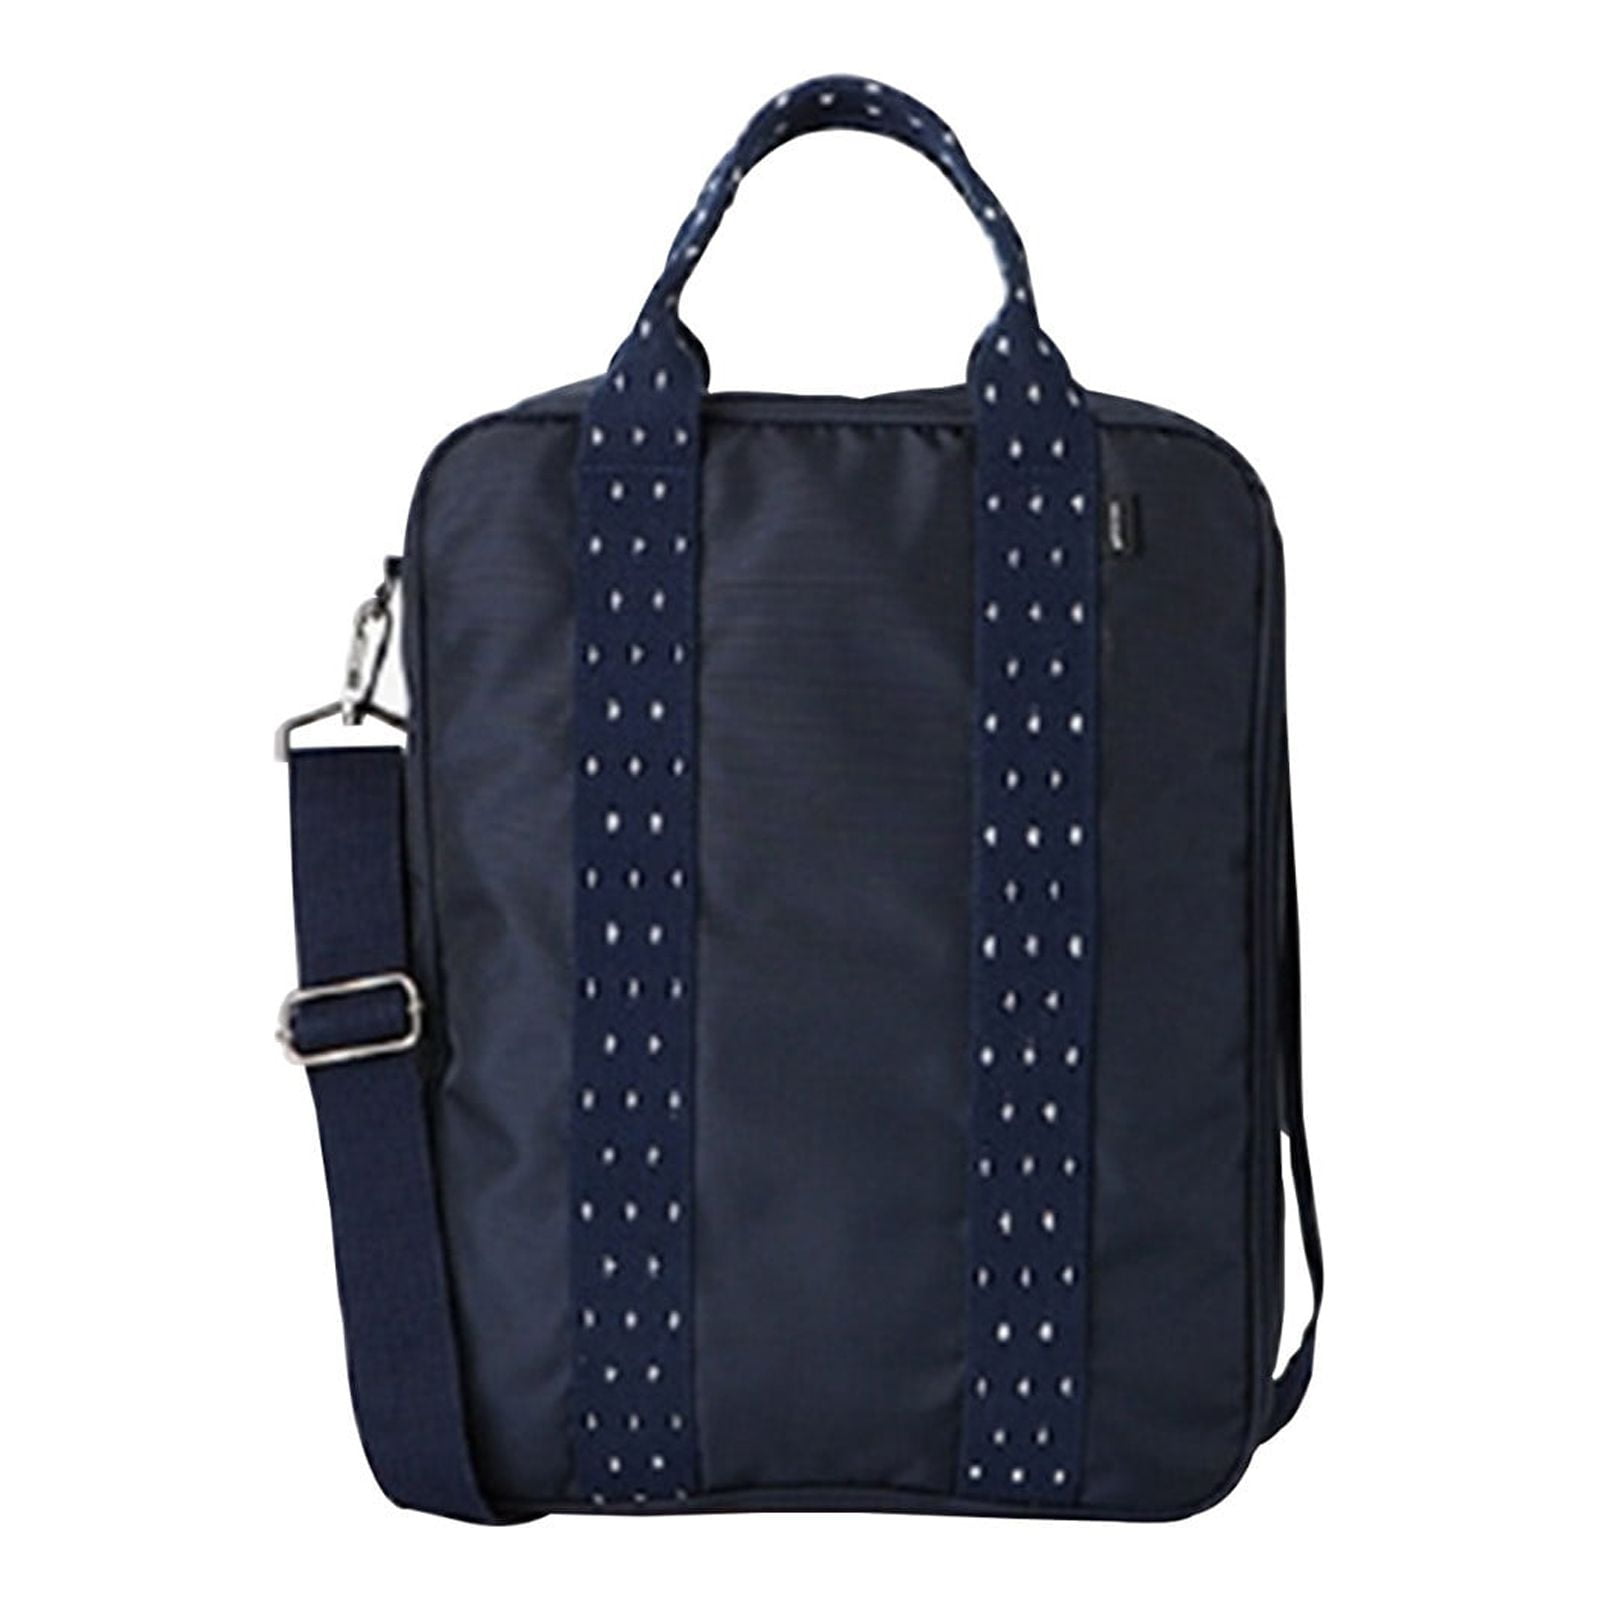 VIVAWM Travel Duffel Bag With Shoulder Straps,Sports Tote Gym Bag ...